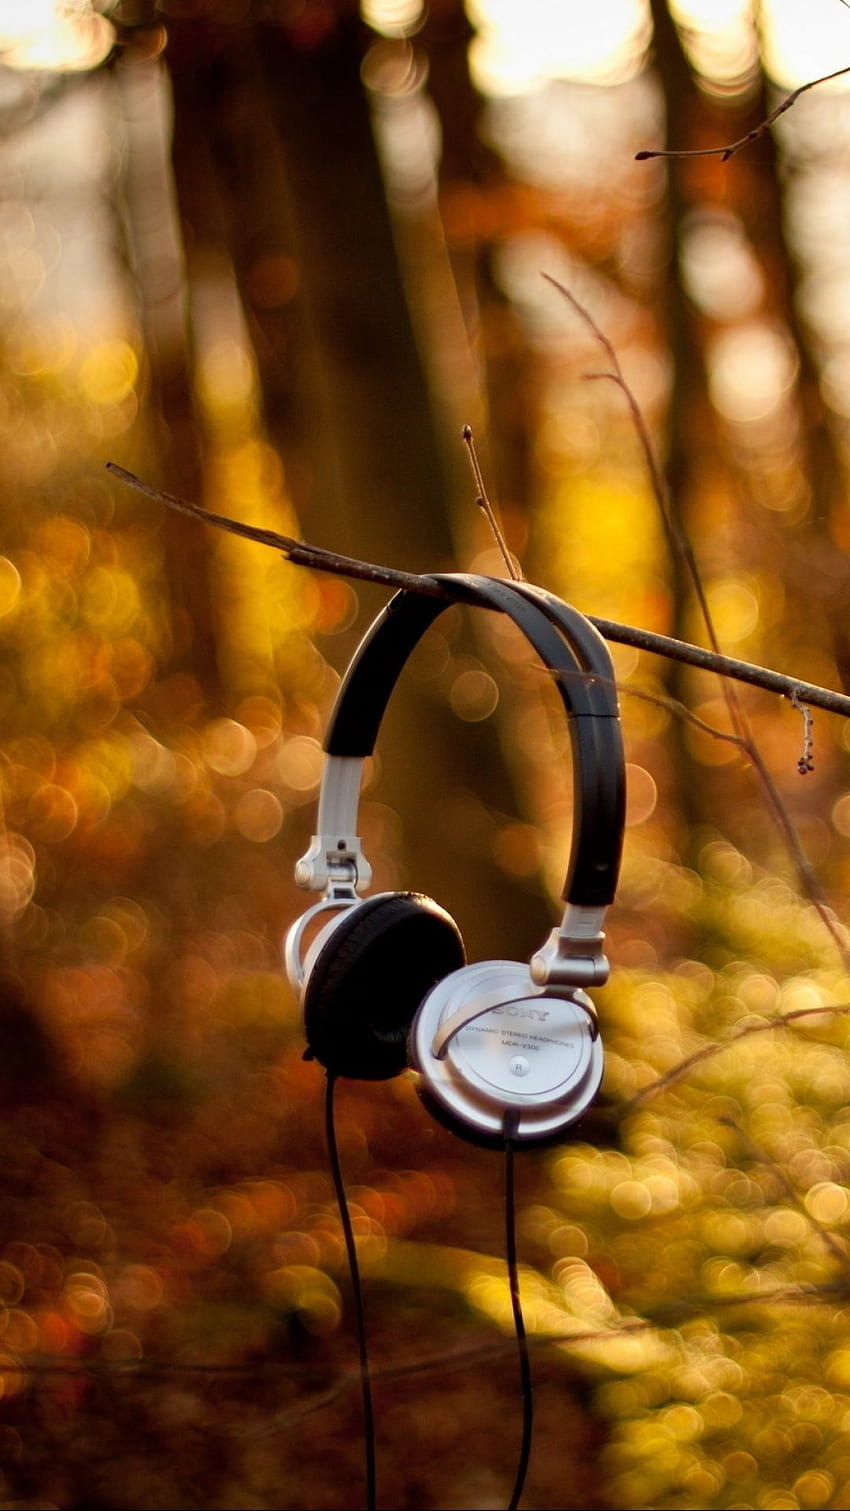 27+ Headphones Pictures | Download Free Images on Unsplash